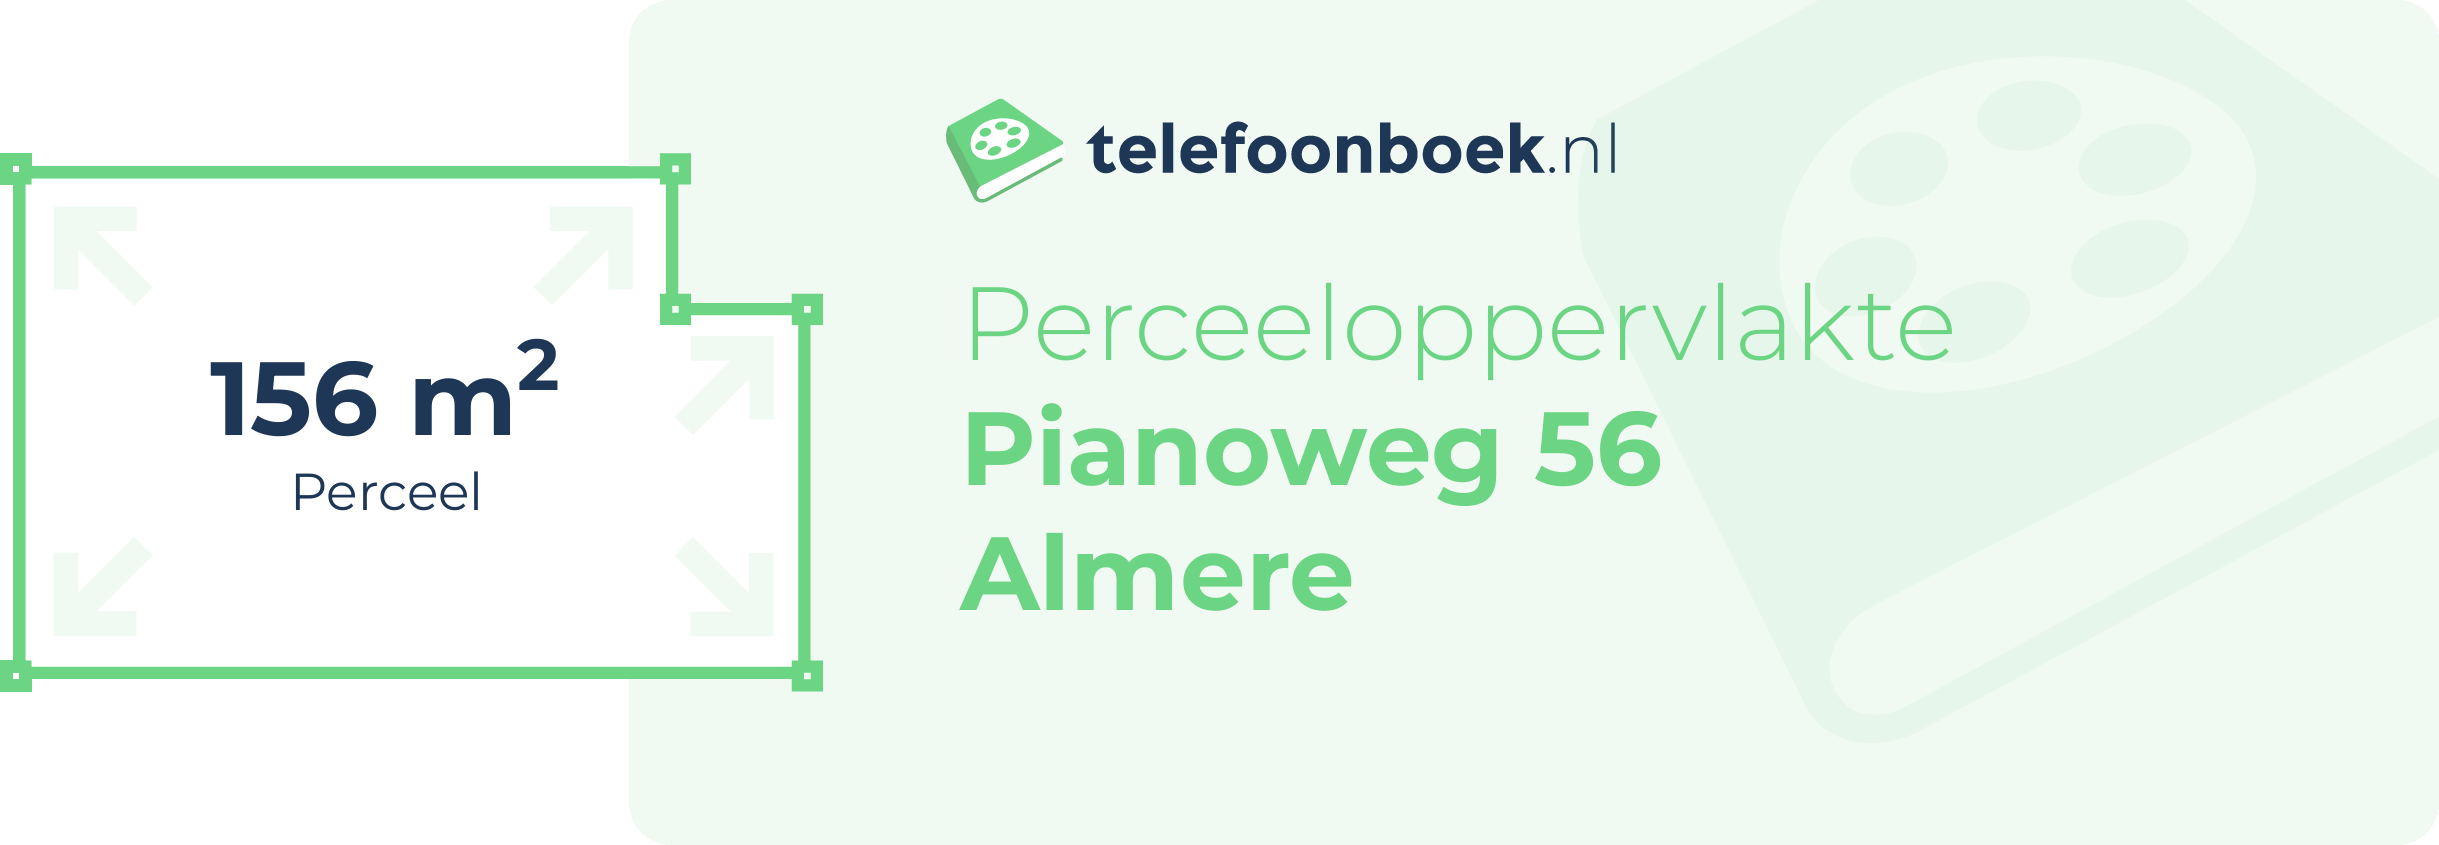 Perceeloppervlakte Pianoweg 56 Almere